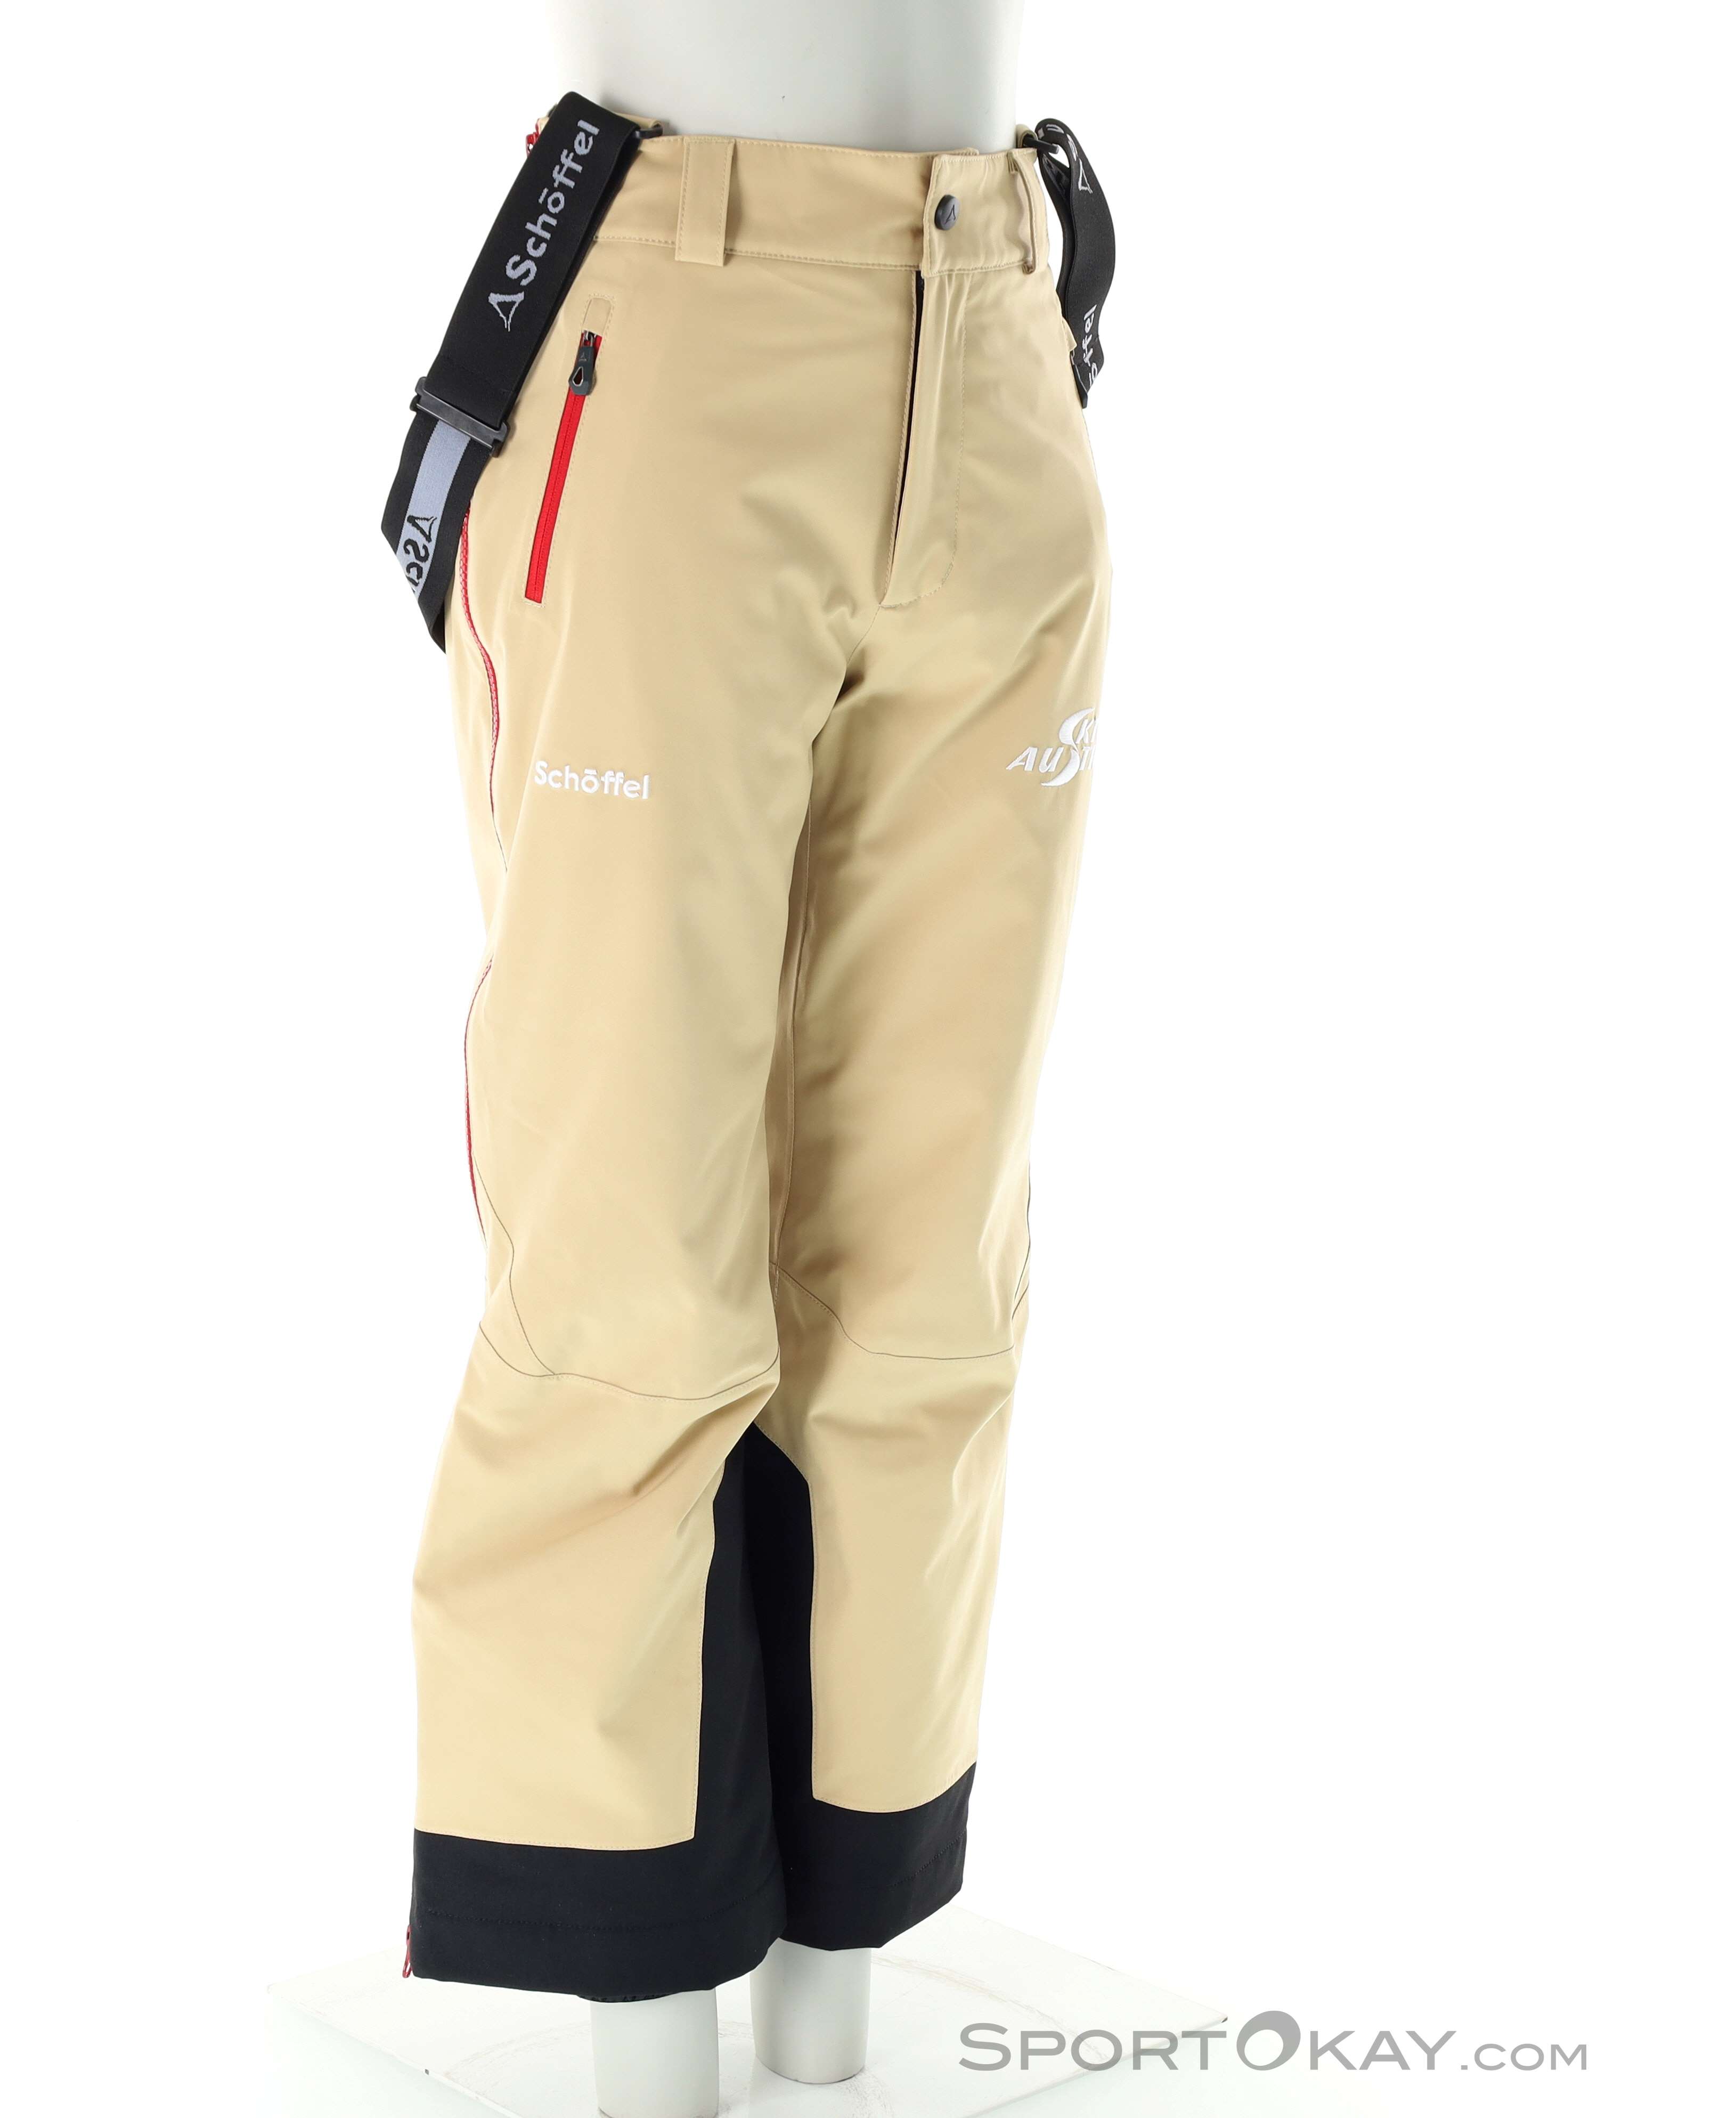 Schöffel Stretchpants Zip - RT 1 All Clothing Kids & Freeride - - - Ski Ski Pants Pants Ski Ski